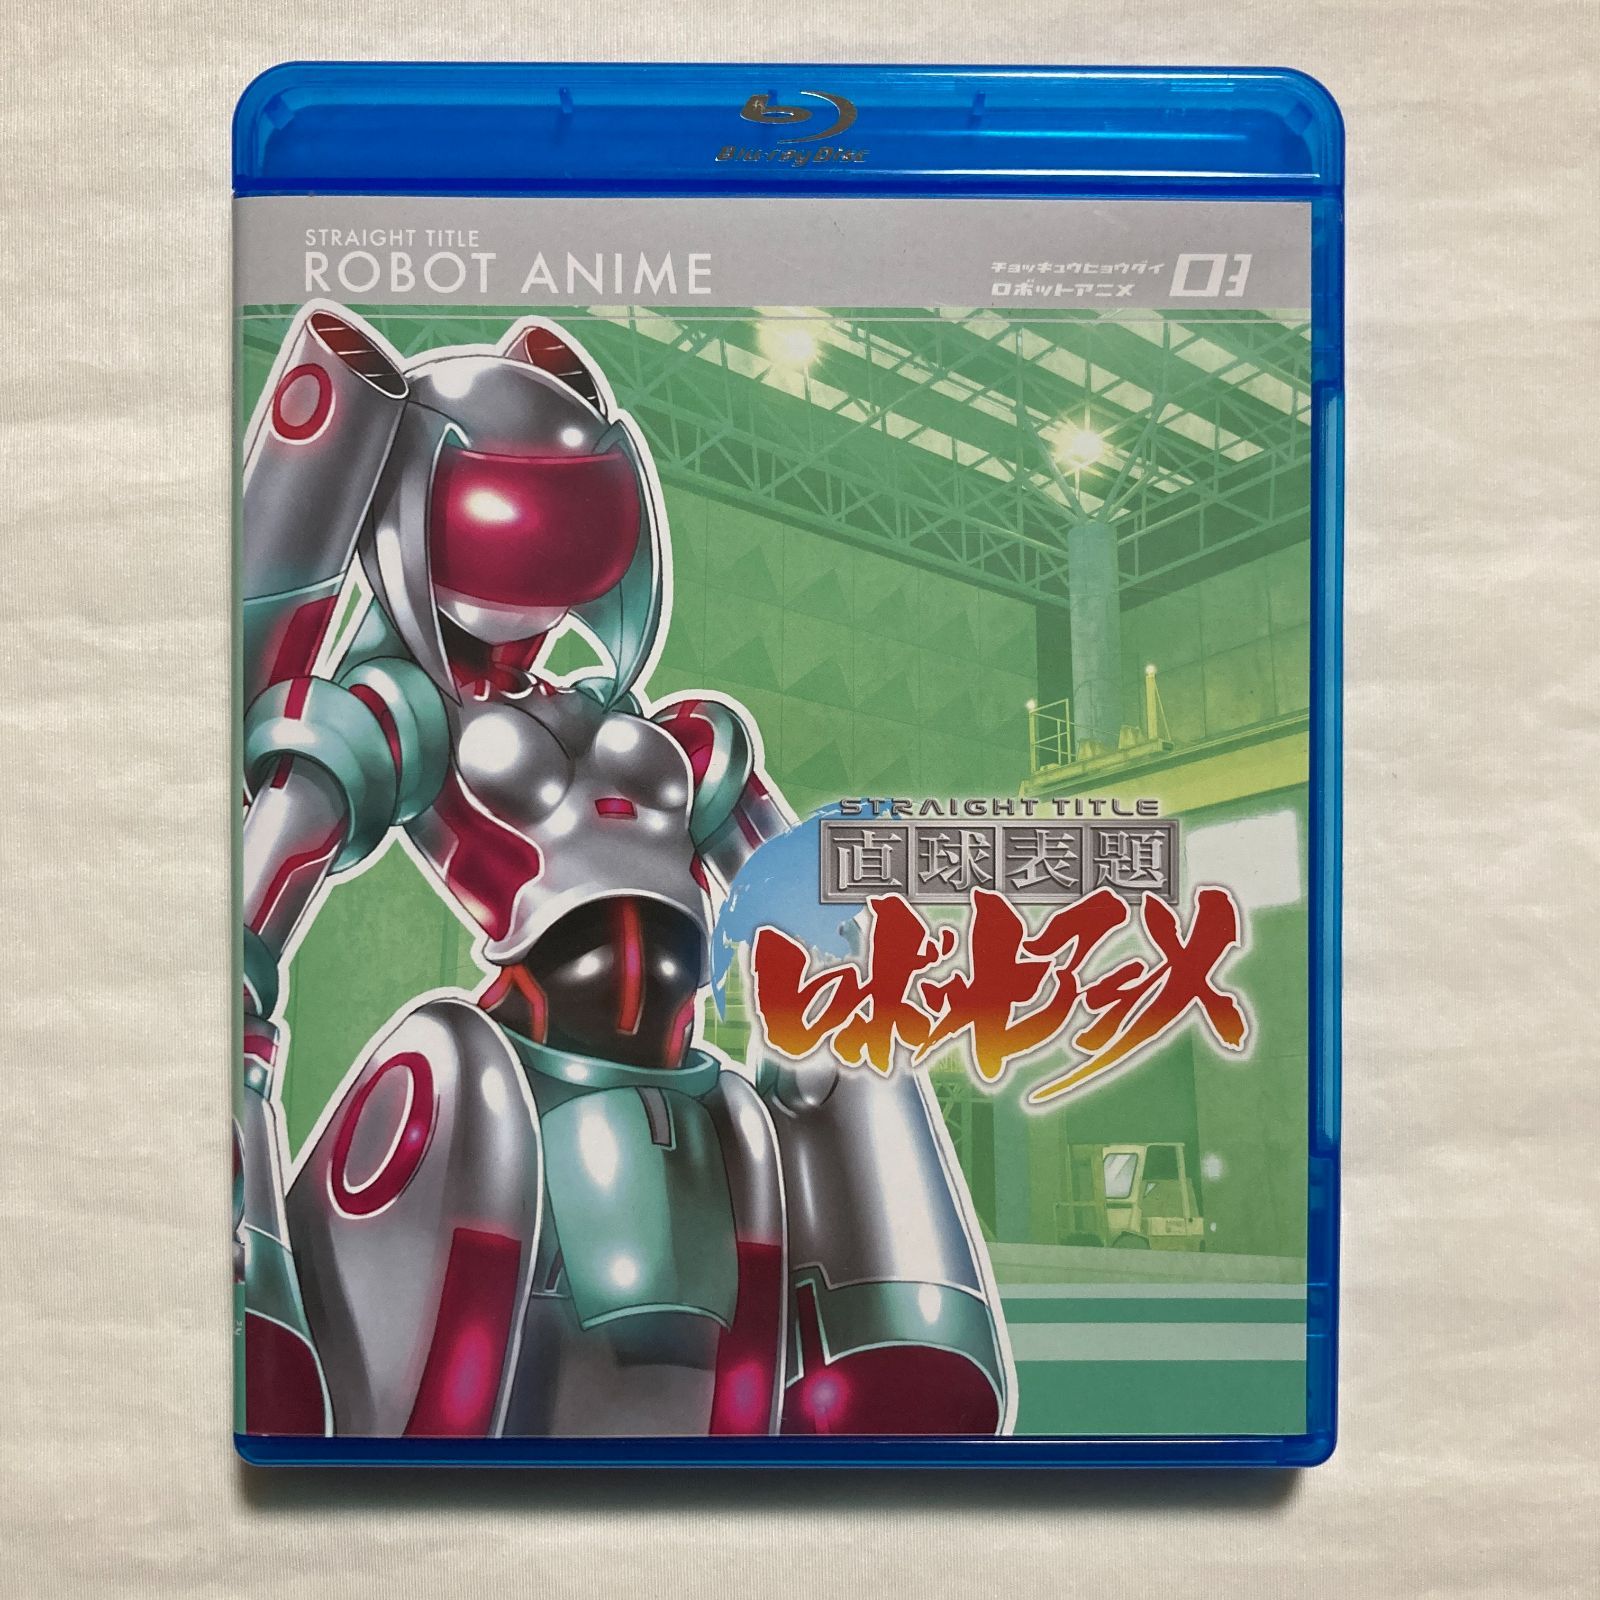 Blu-ray】直球表題ロボットアニメ vol.3[CD付] XNTP-10005/B